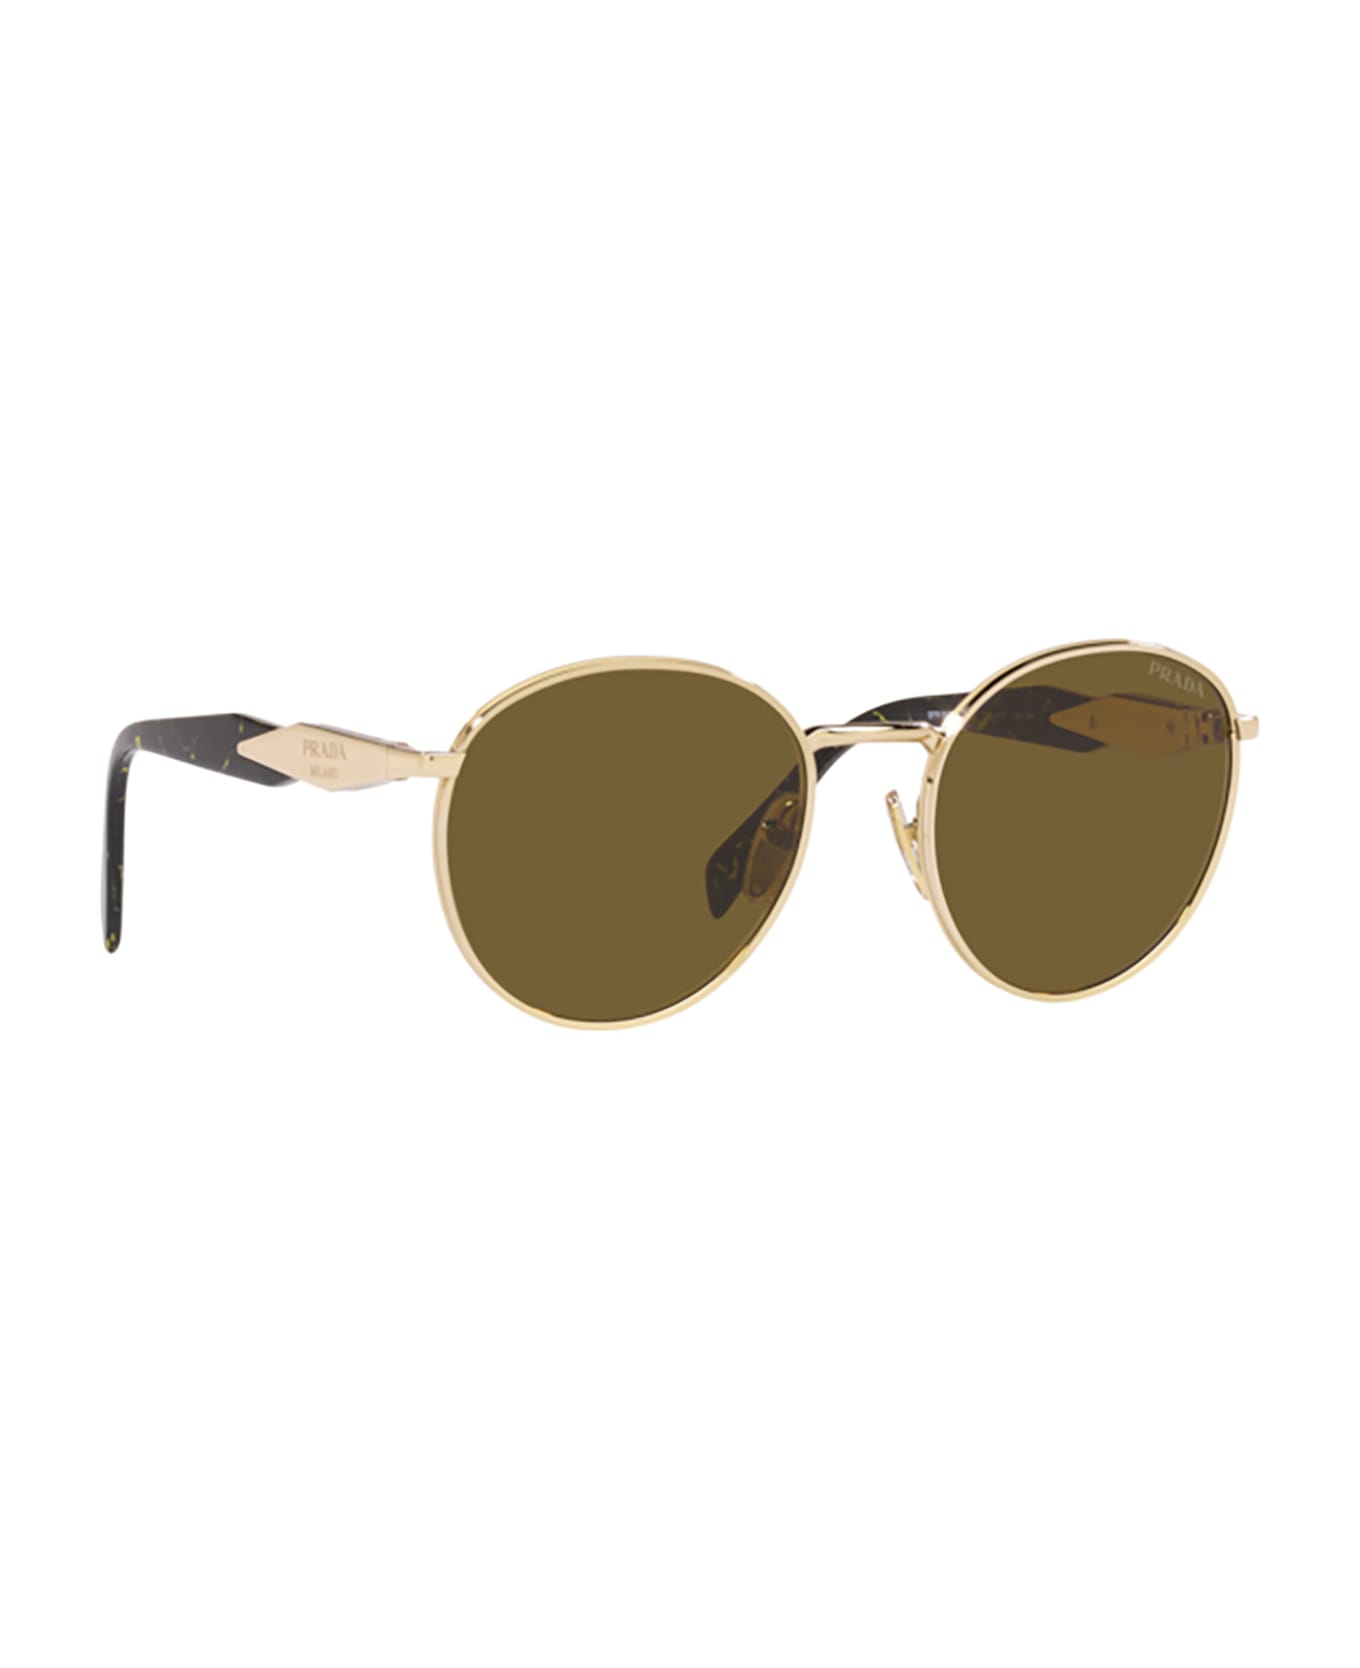 Prada Eyewear Pr 56zs Pale Gold Sunglasses - Pale Gold